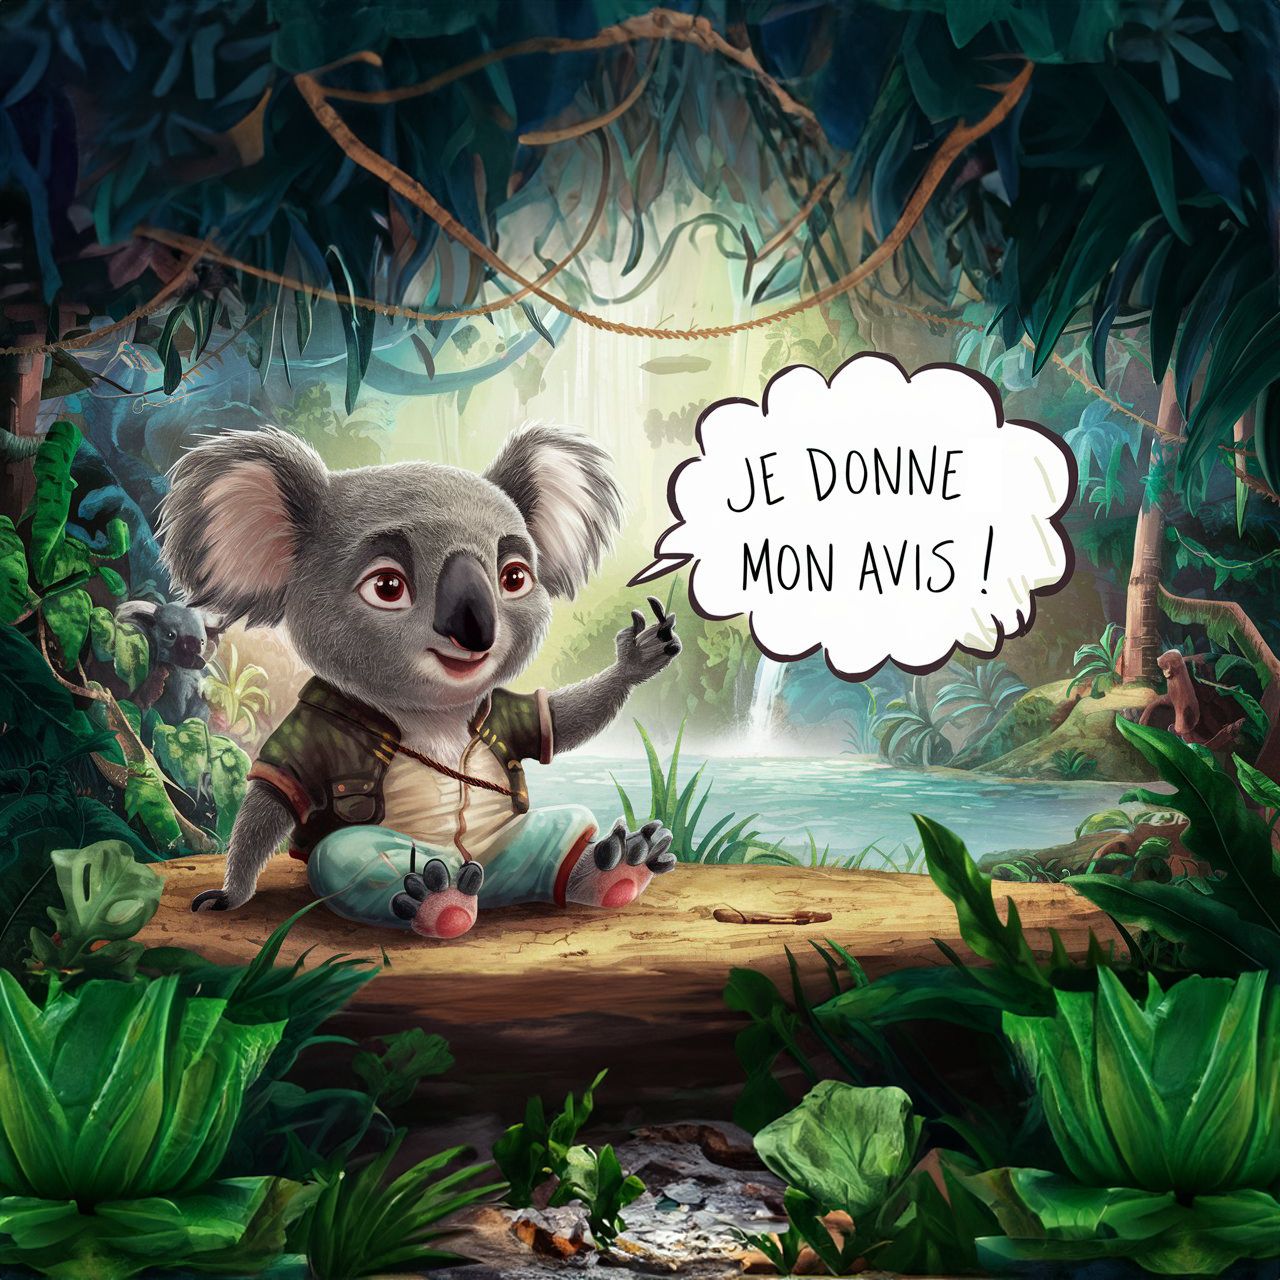 Hoop, le Koala de V3RT, agence de communication, donne son avis !